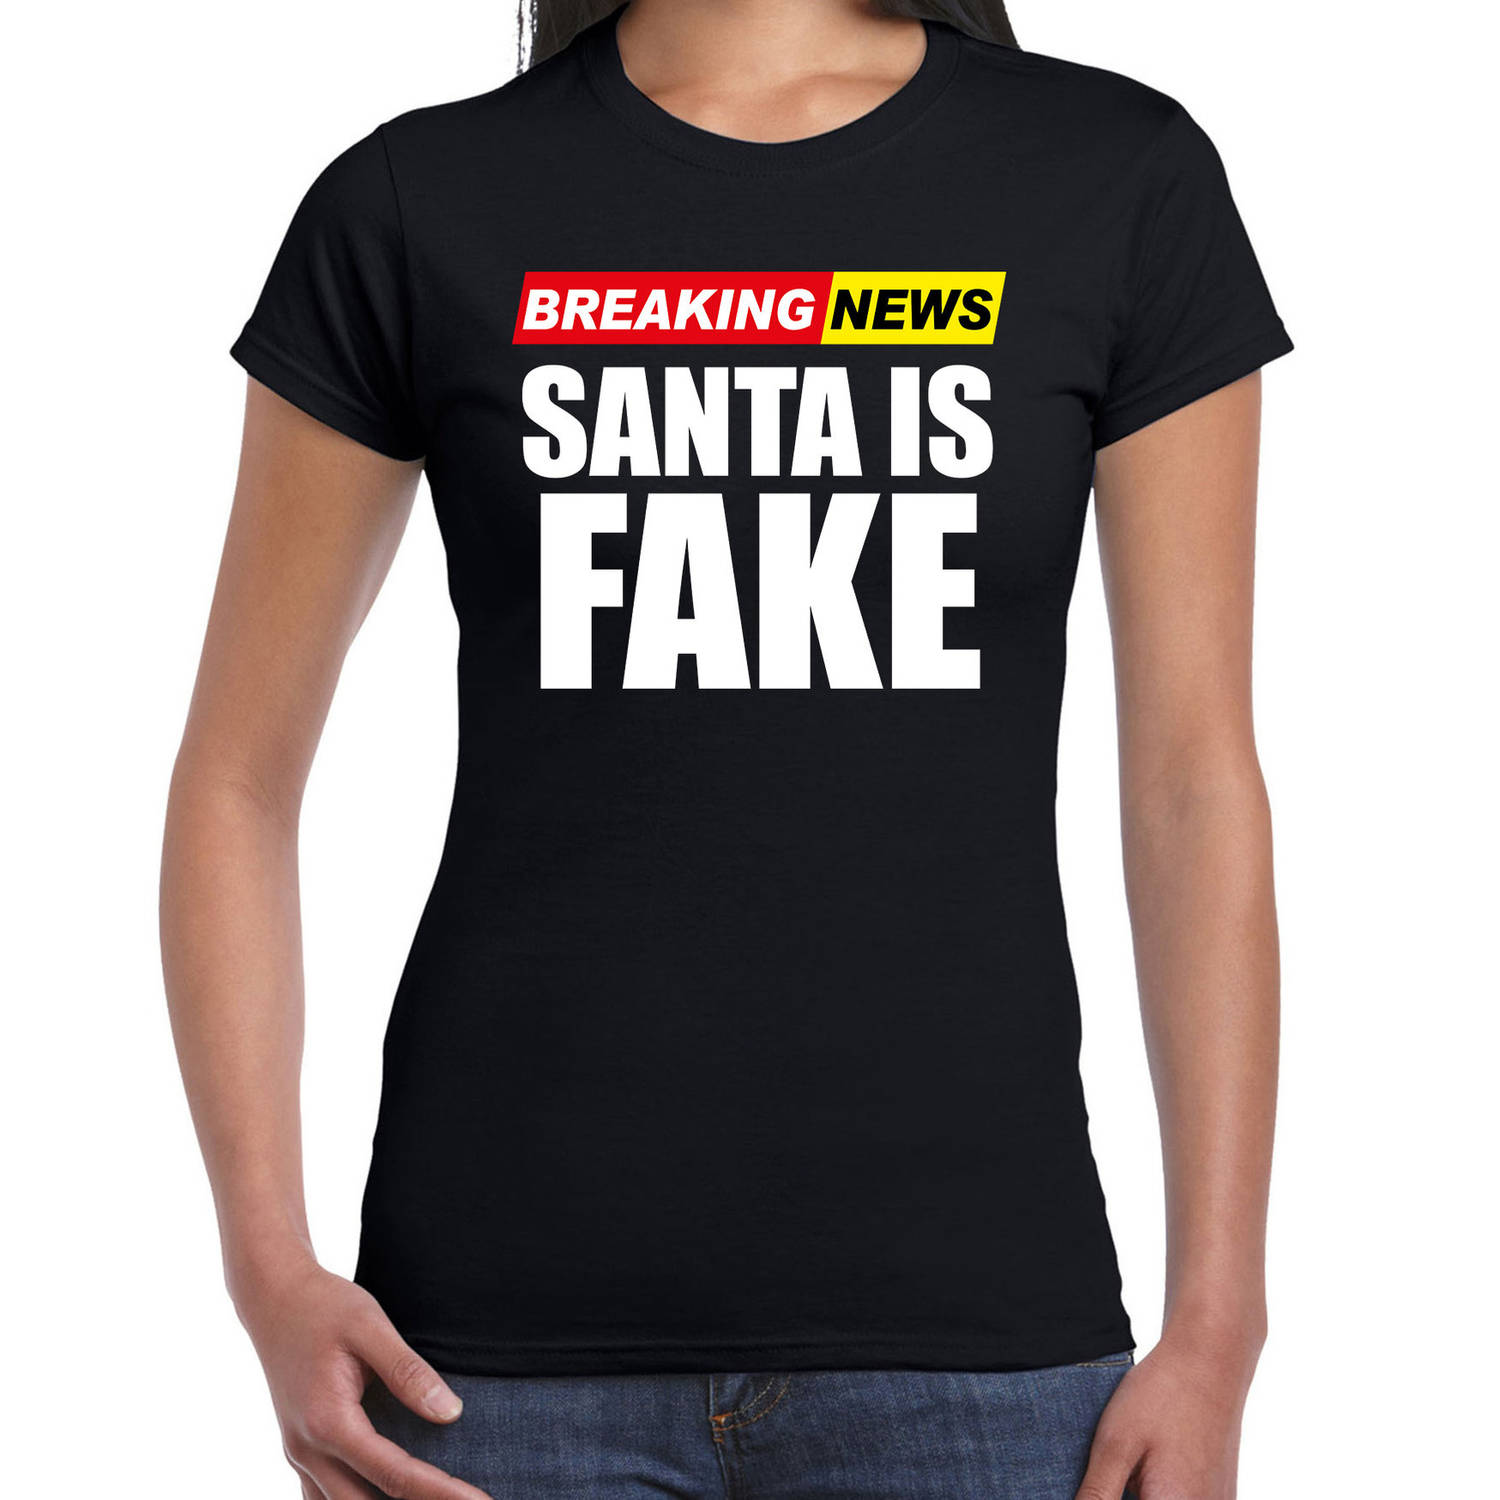 Fout humor Kerst T-shirt breaking news fake voor dames zwart XL - kerst t-shirts